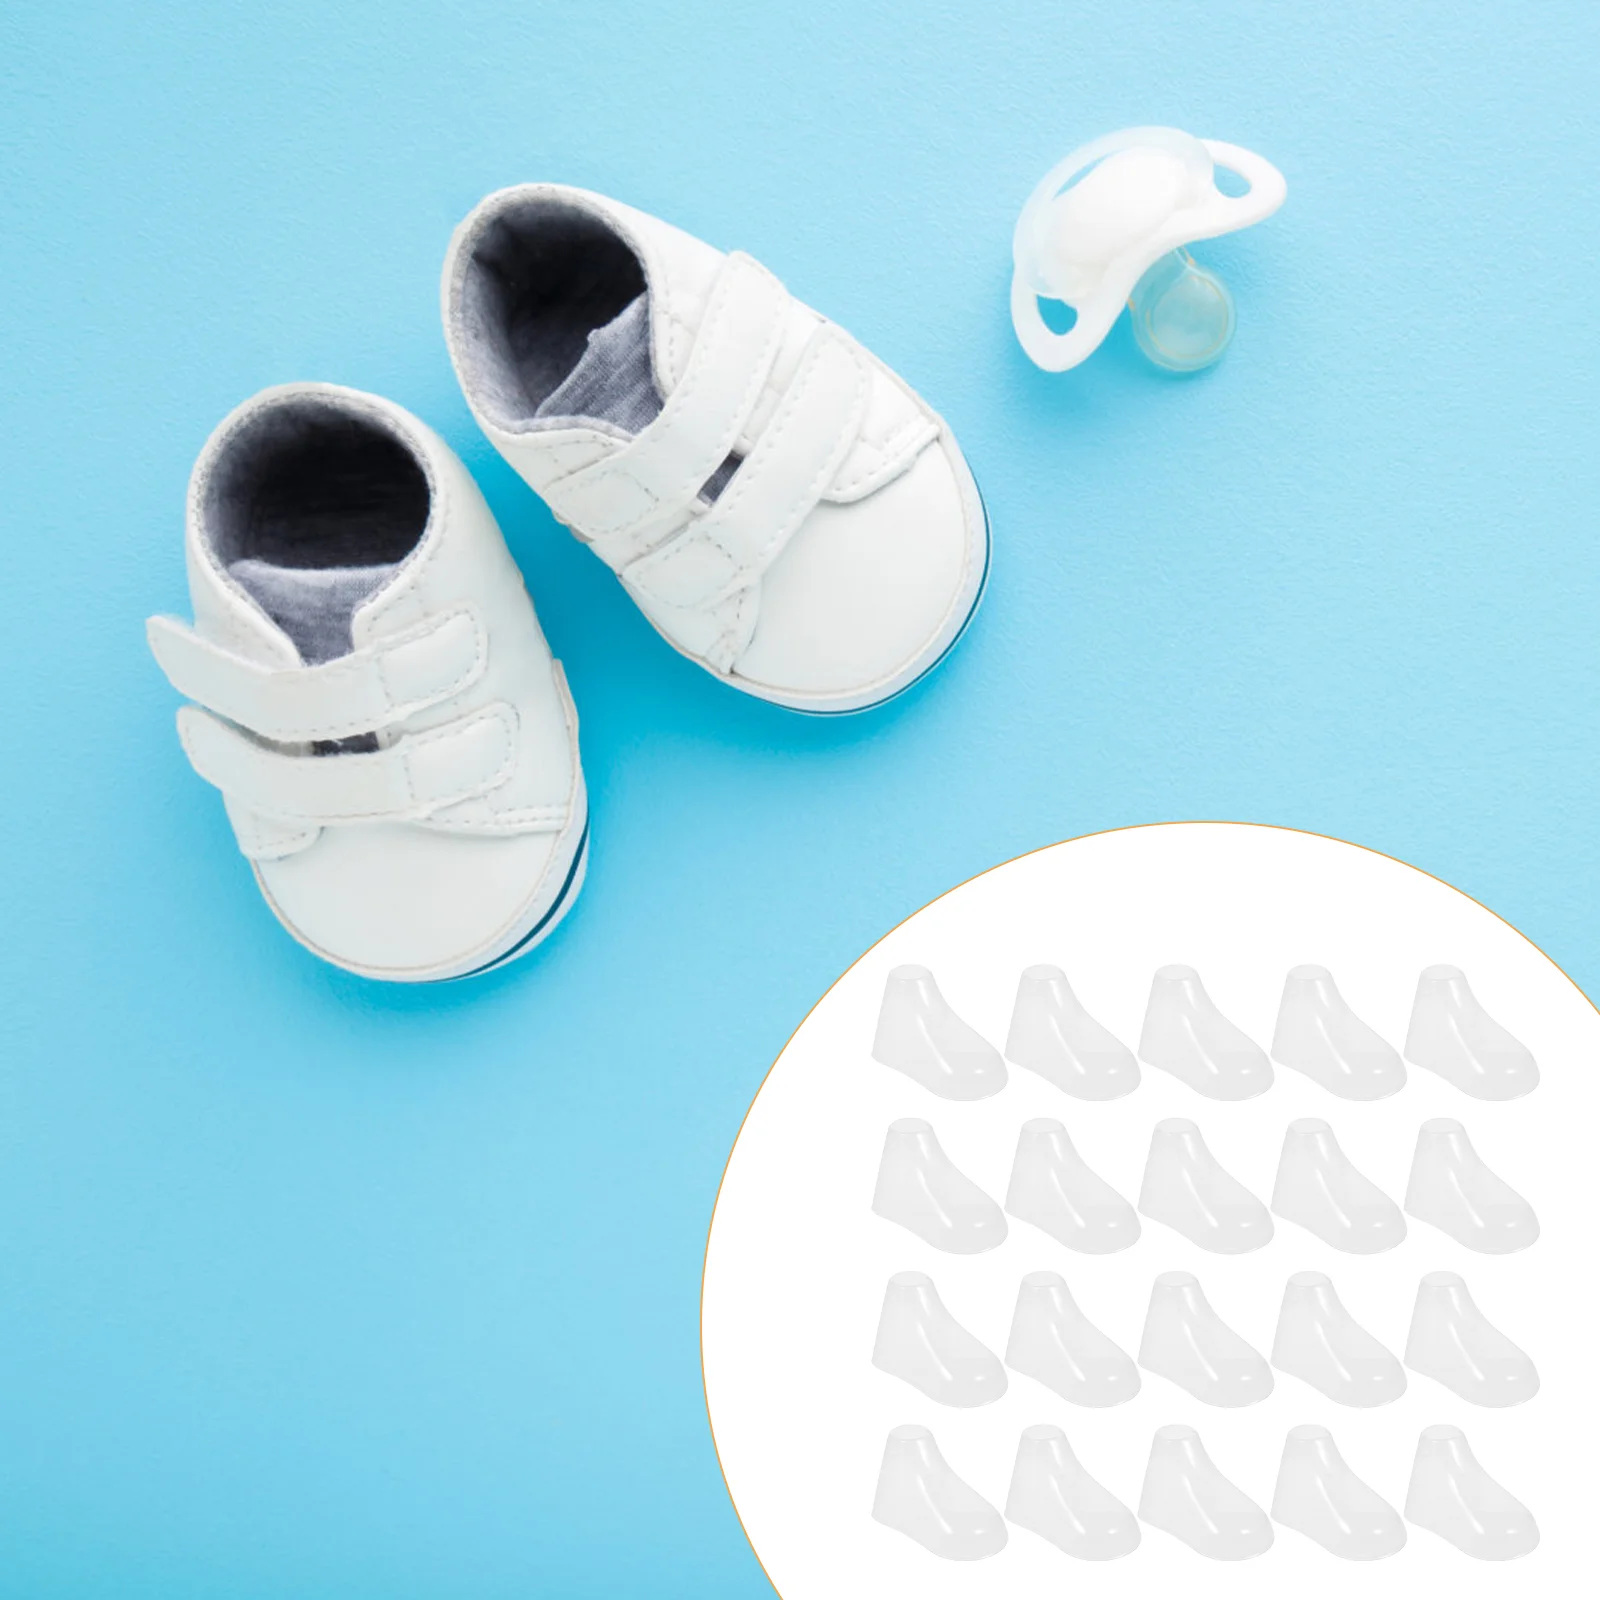 

40 Pcs Clear Plastic Shoe Tree Human Body Model Children Shoes Display Stands Socks Filler Feet Mannequin Baby Holder